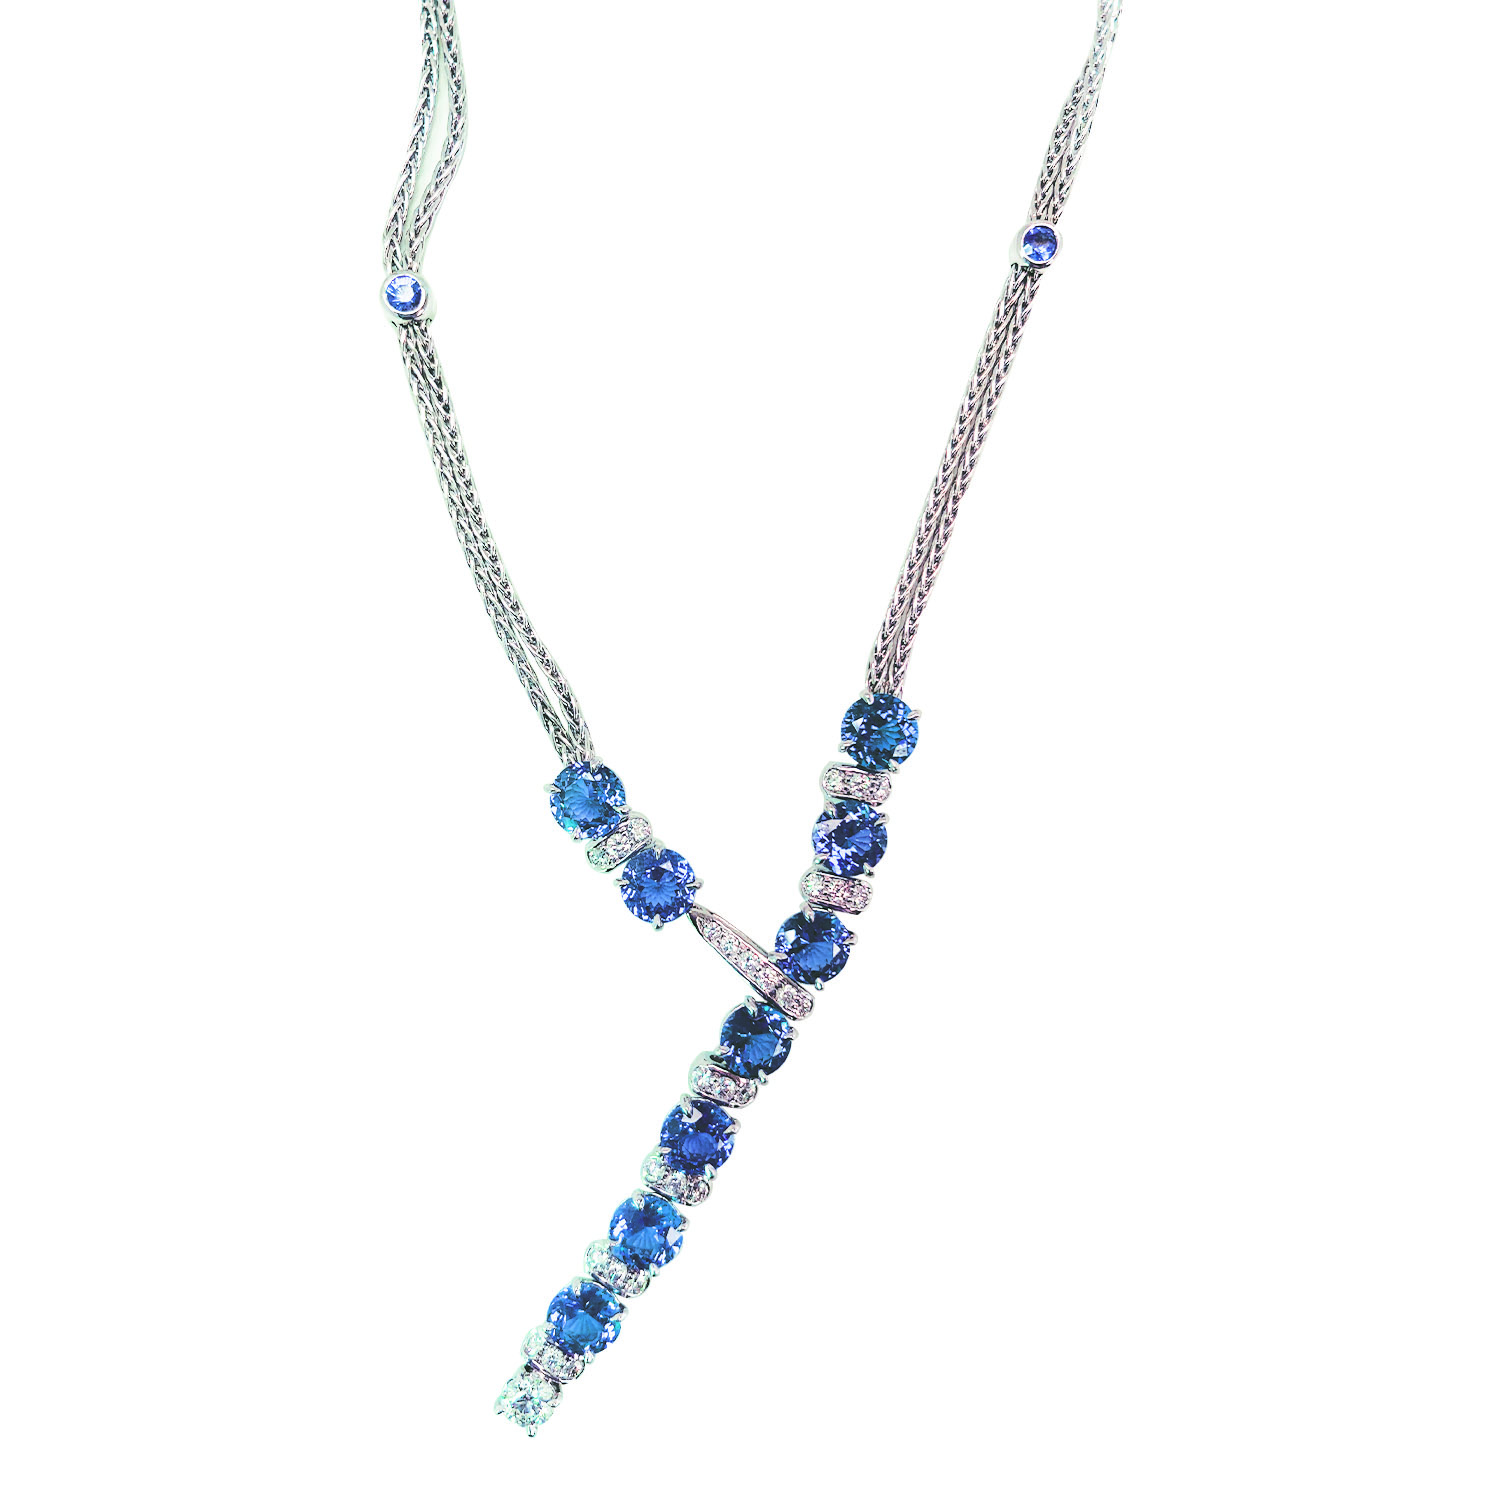 Blue Sapphire Y Necklace by Jeffrey Bilgore. 12.44 cts. blue sapphires, with diamonds, set in platinum